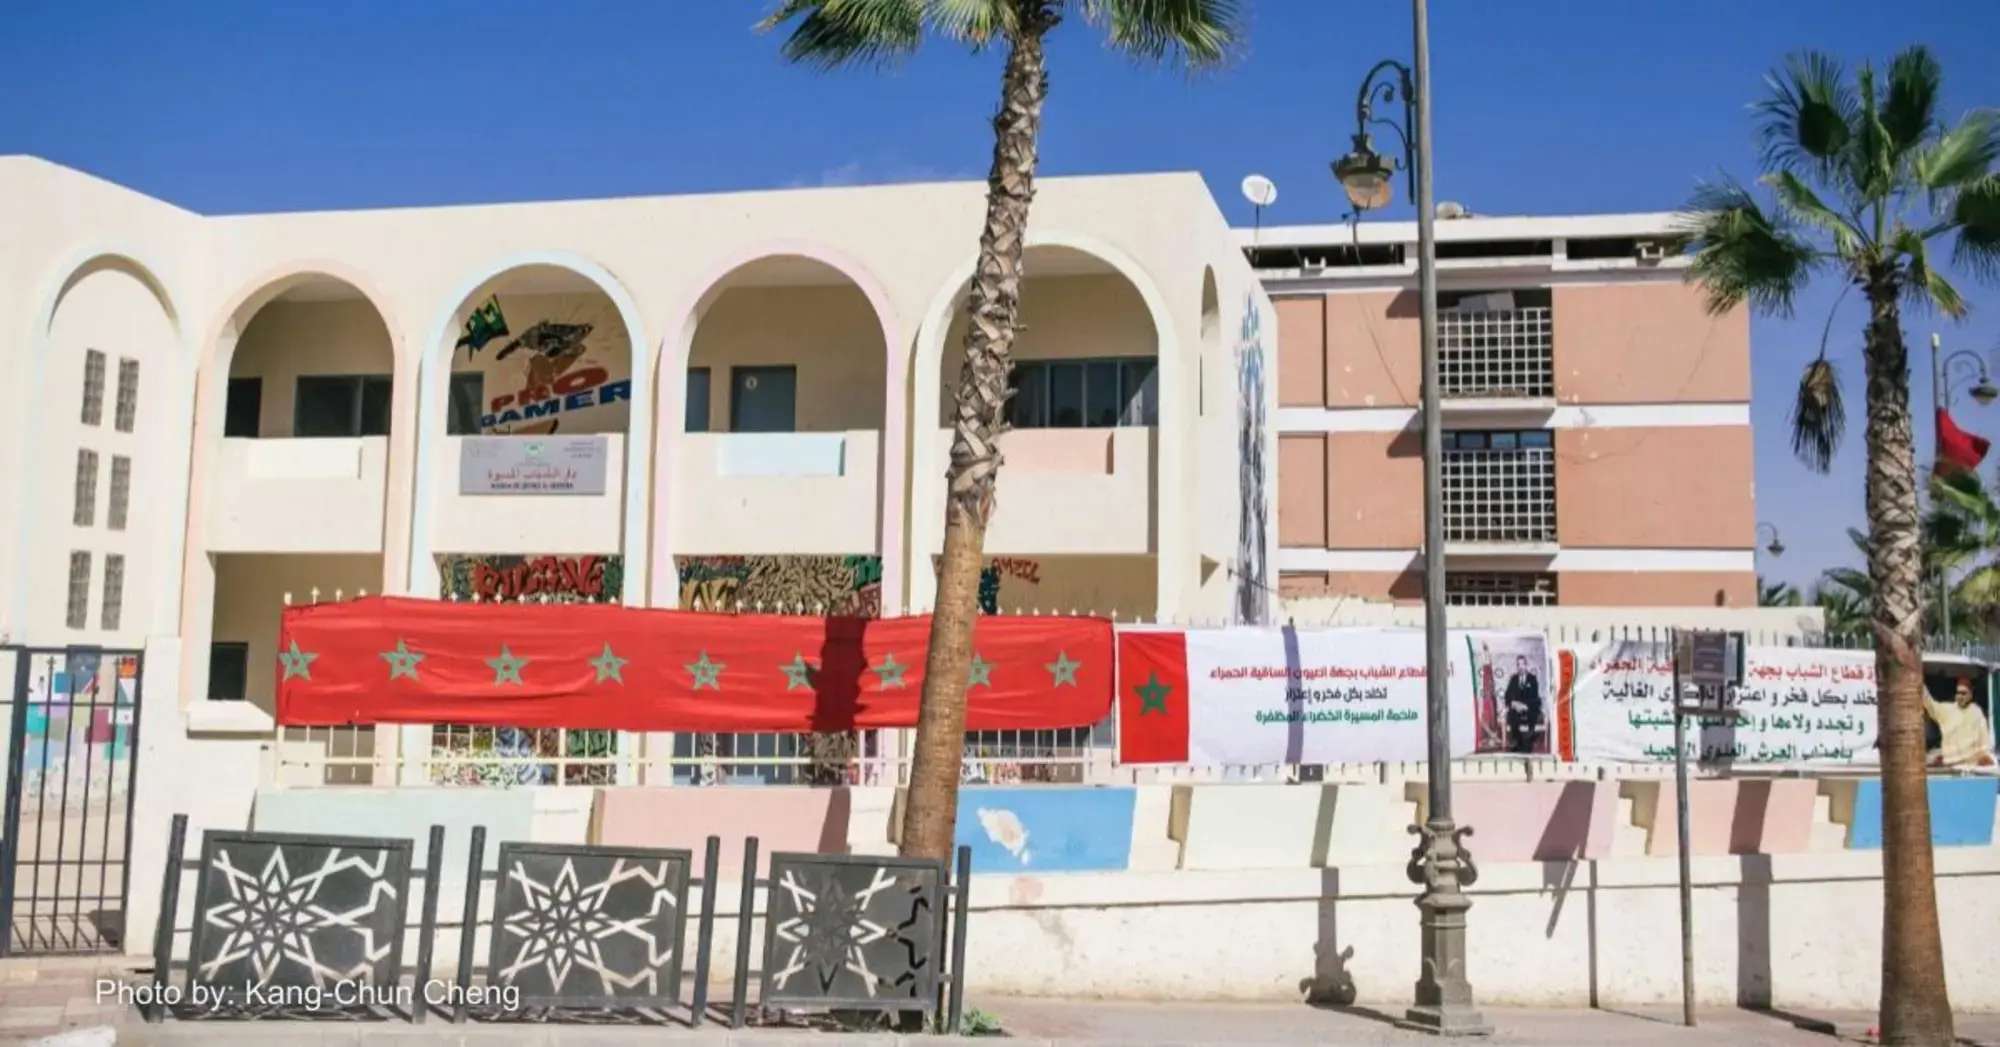 Moroccan flag displayed on building in Western Sahara